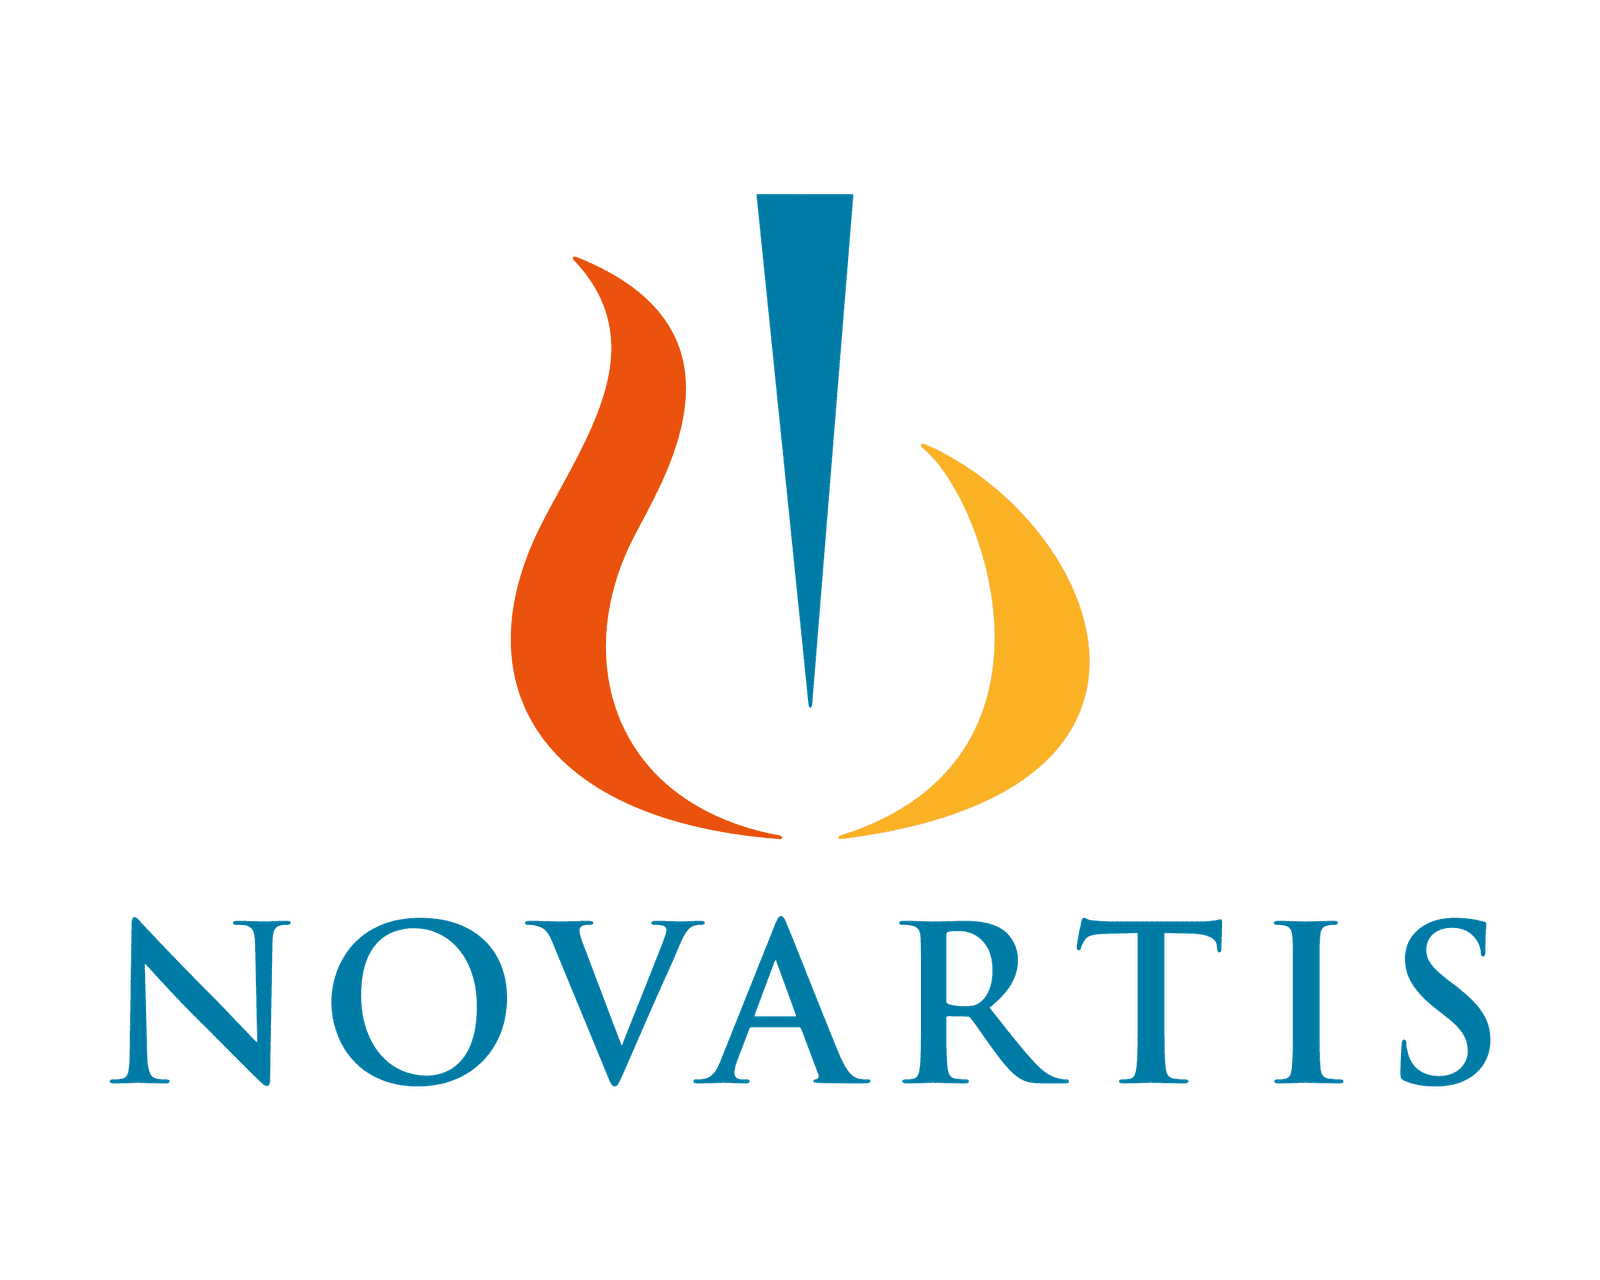 Neo4j Customer - Novartis